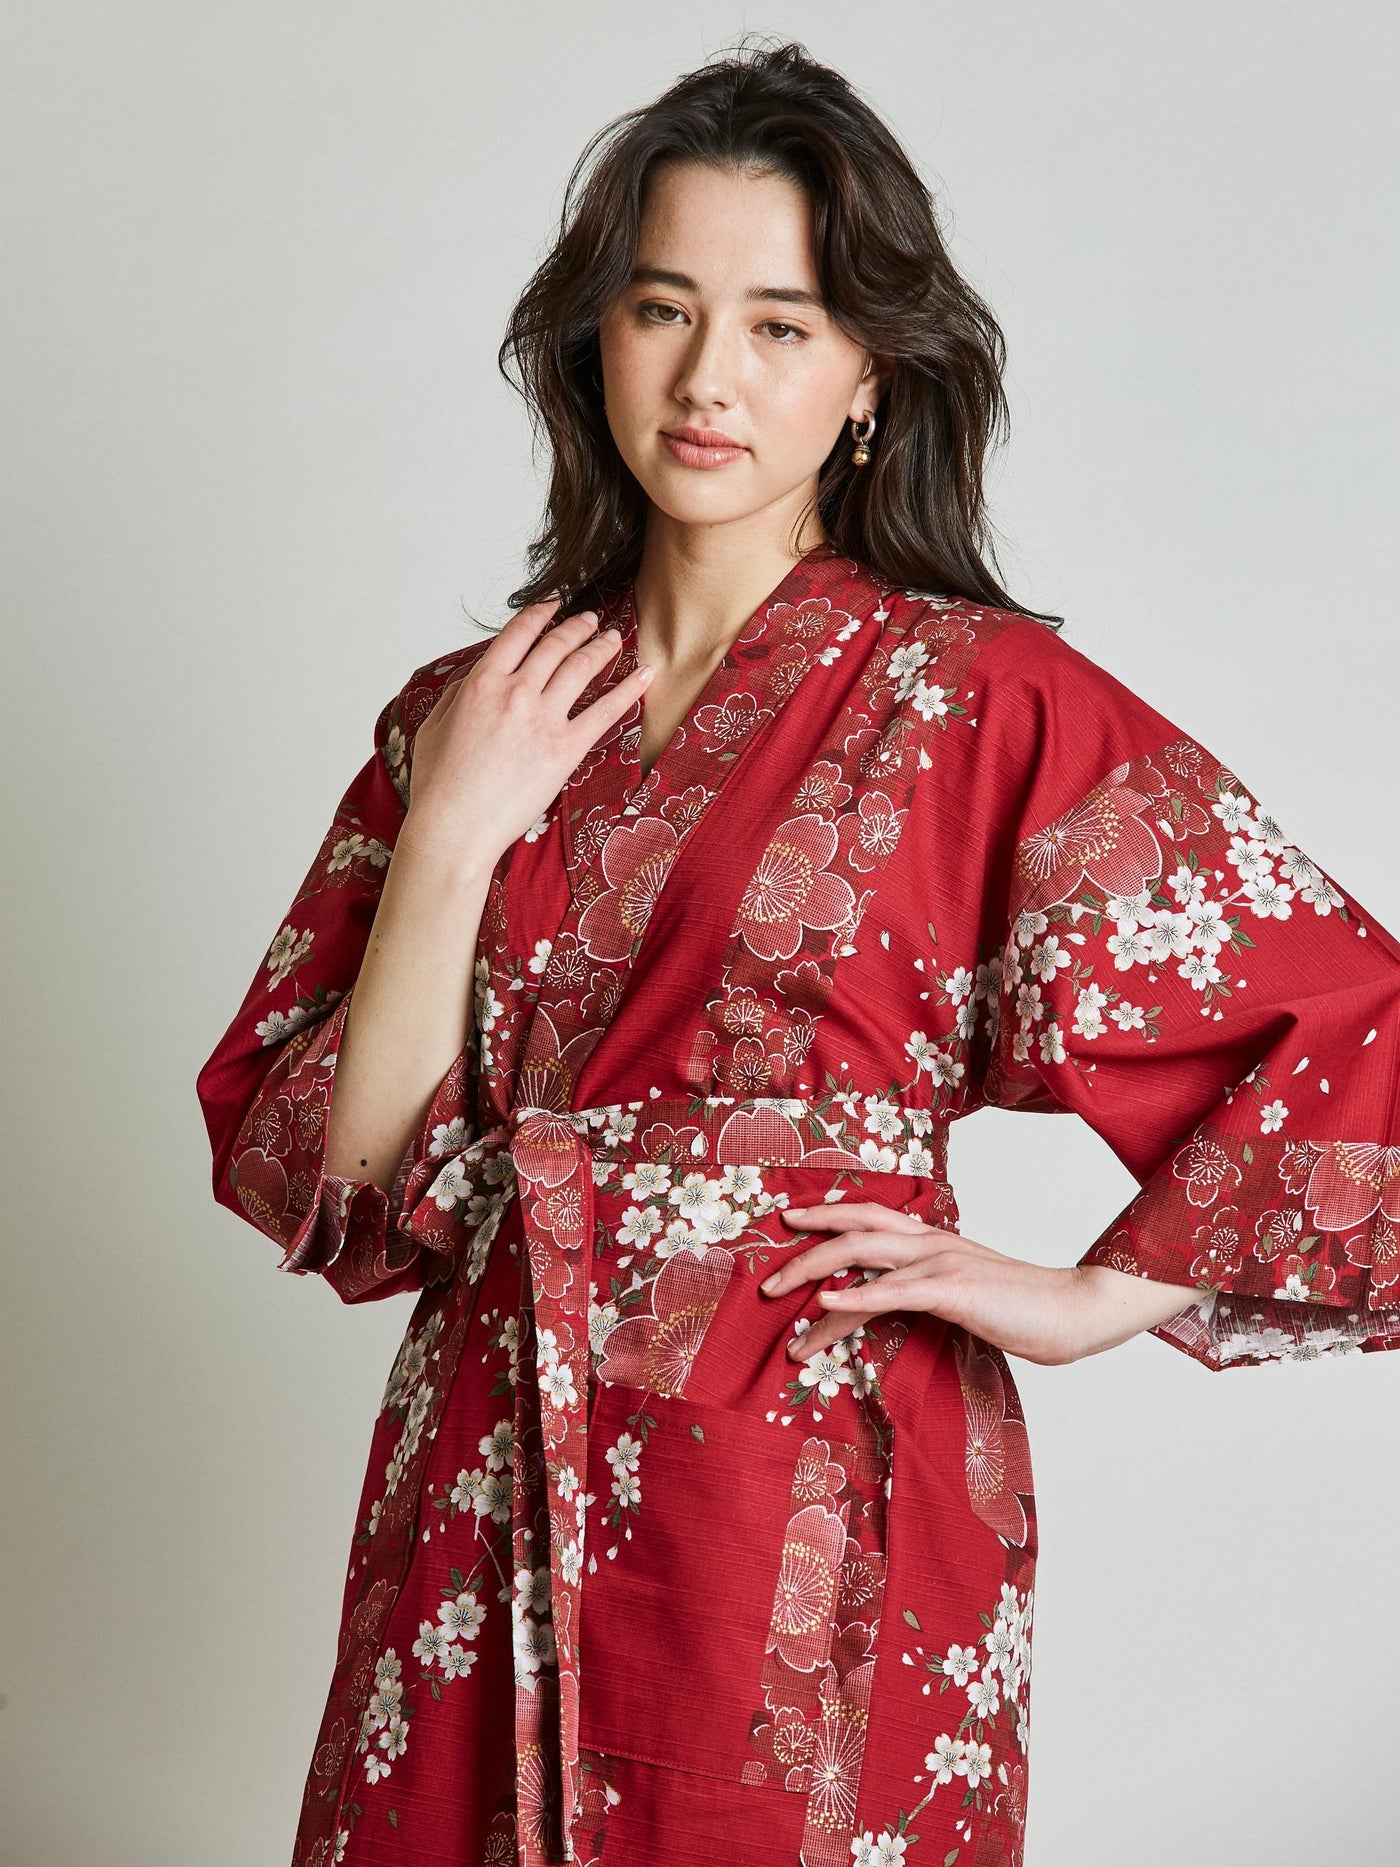 Cherry Blossom Red Kimono Robe close-up